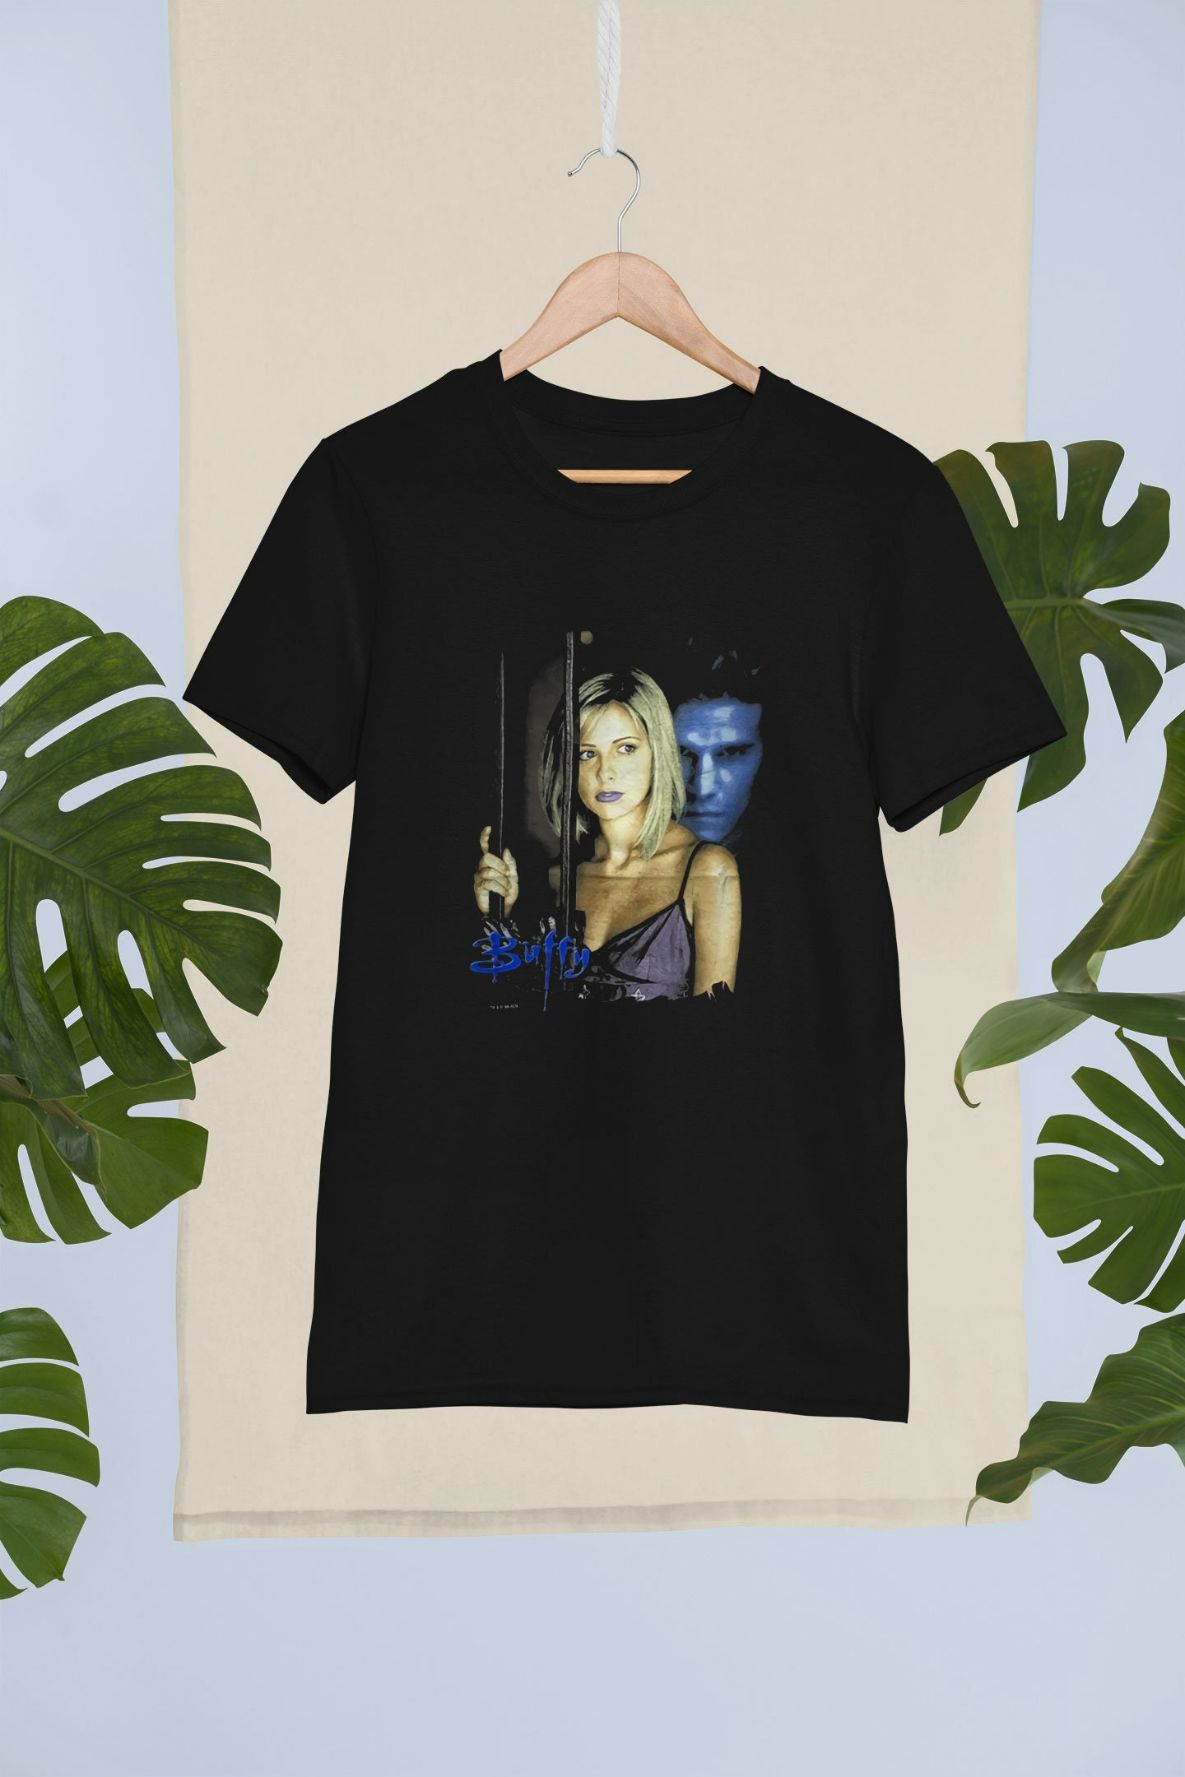 1998 Buffy The Vampire Slayer Buffy Angel Angs T-Shirt